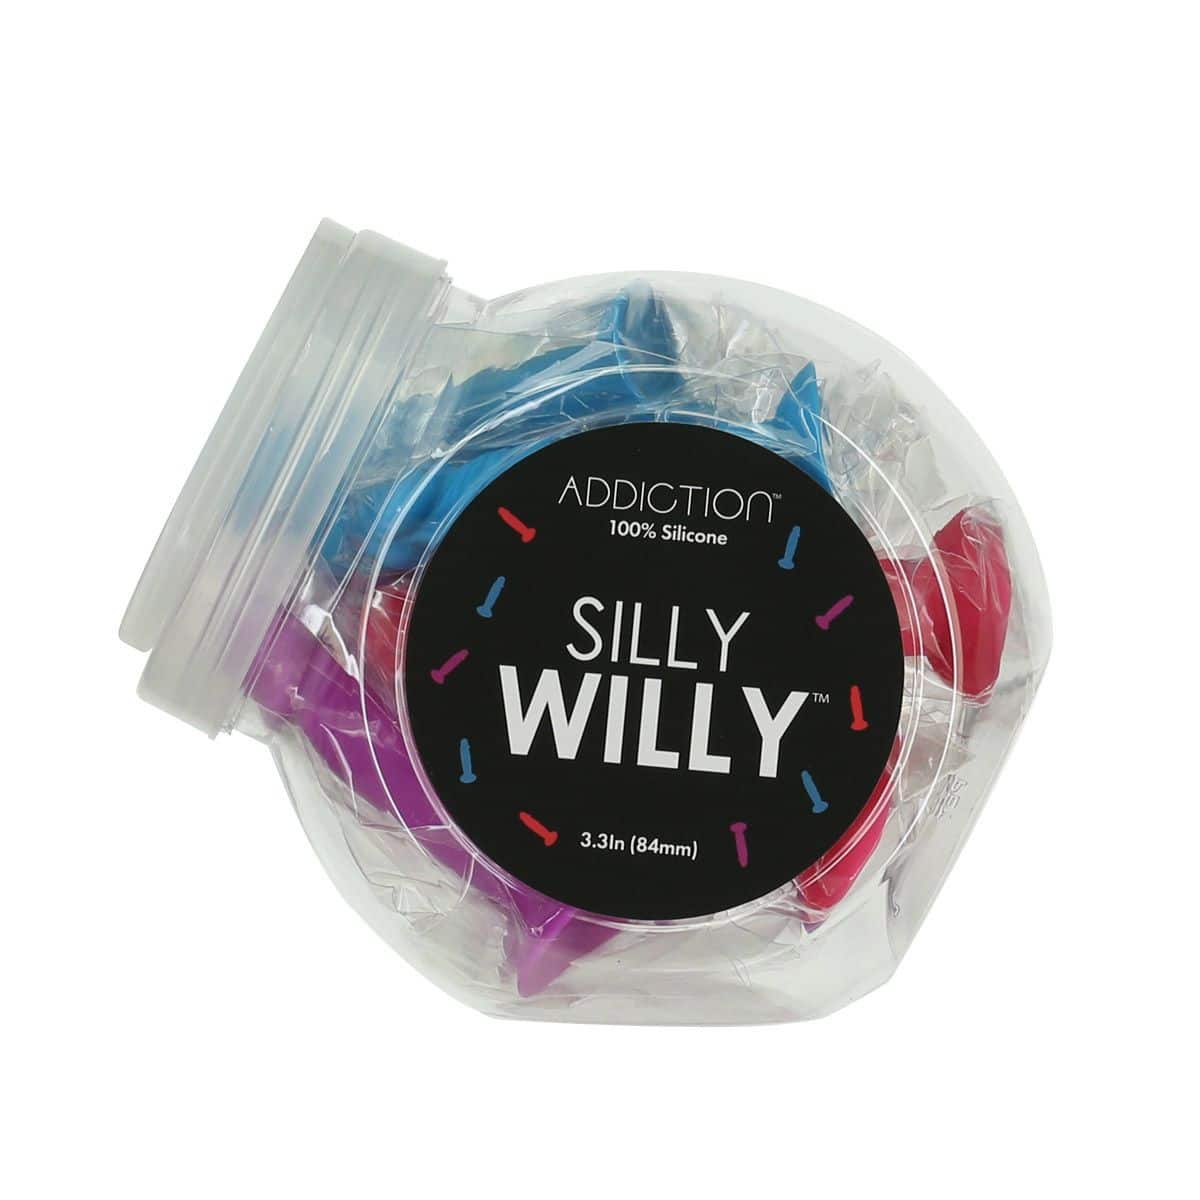 Silly Willy Mini Dildo Plugs